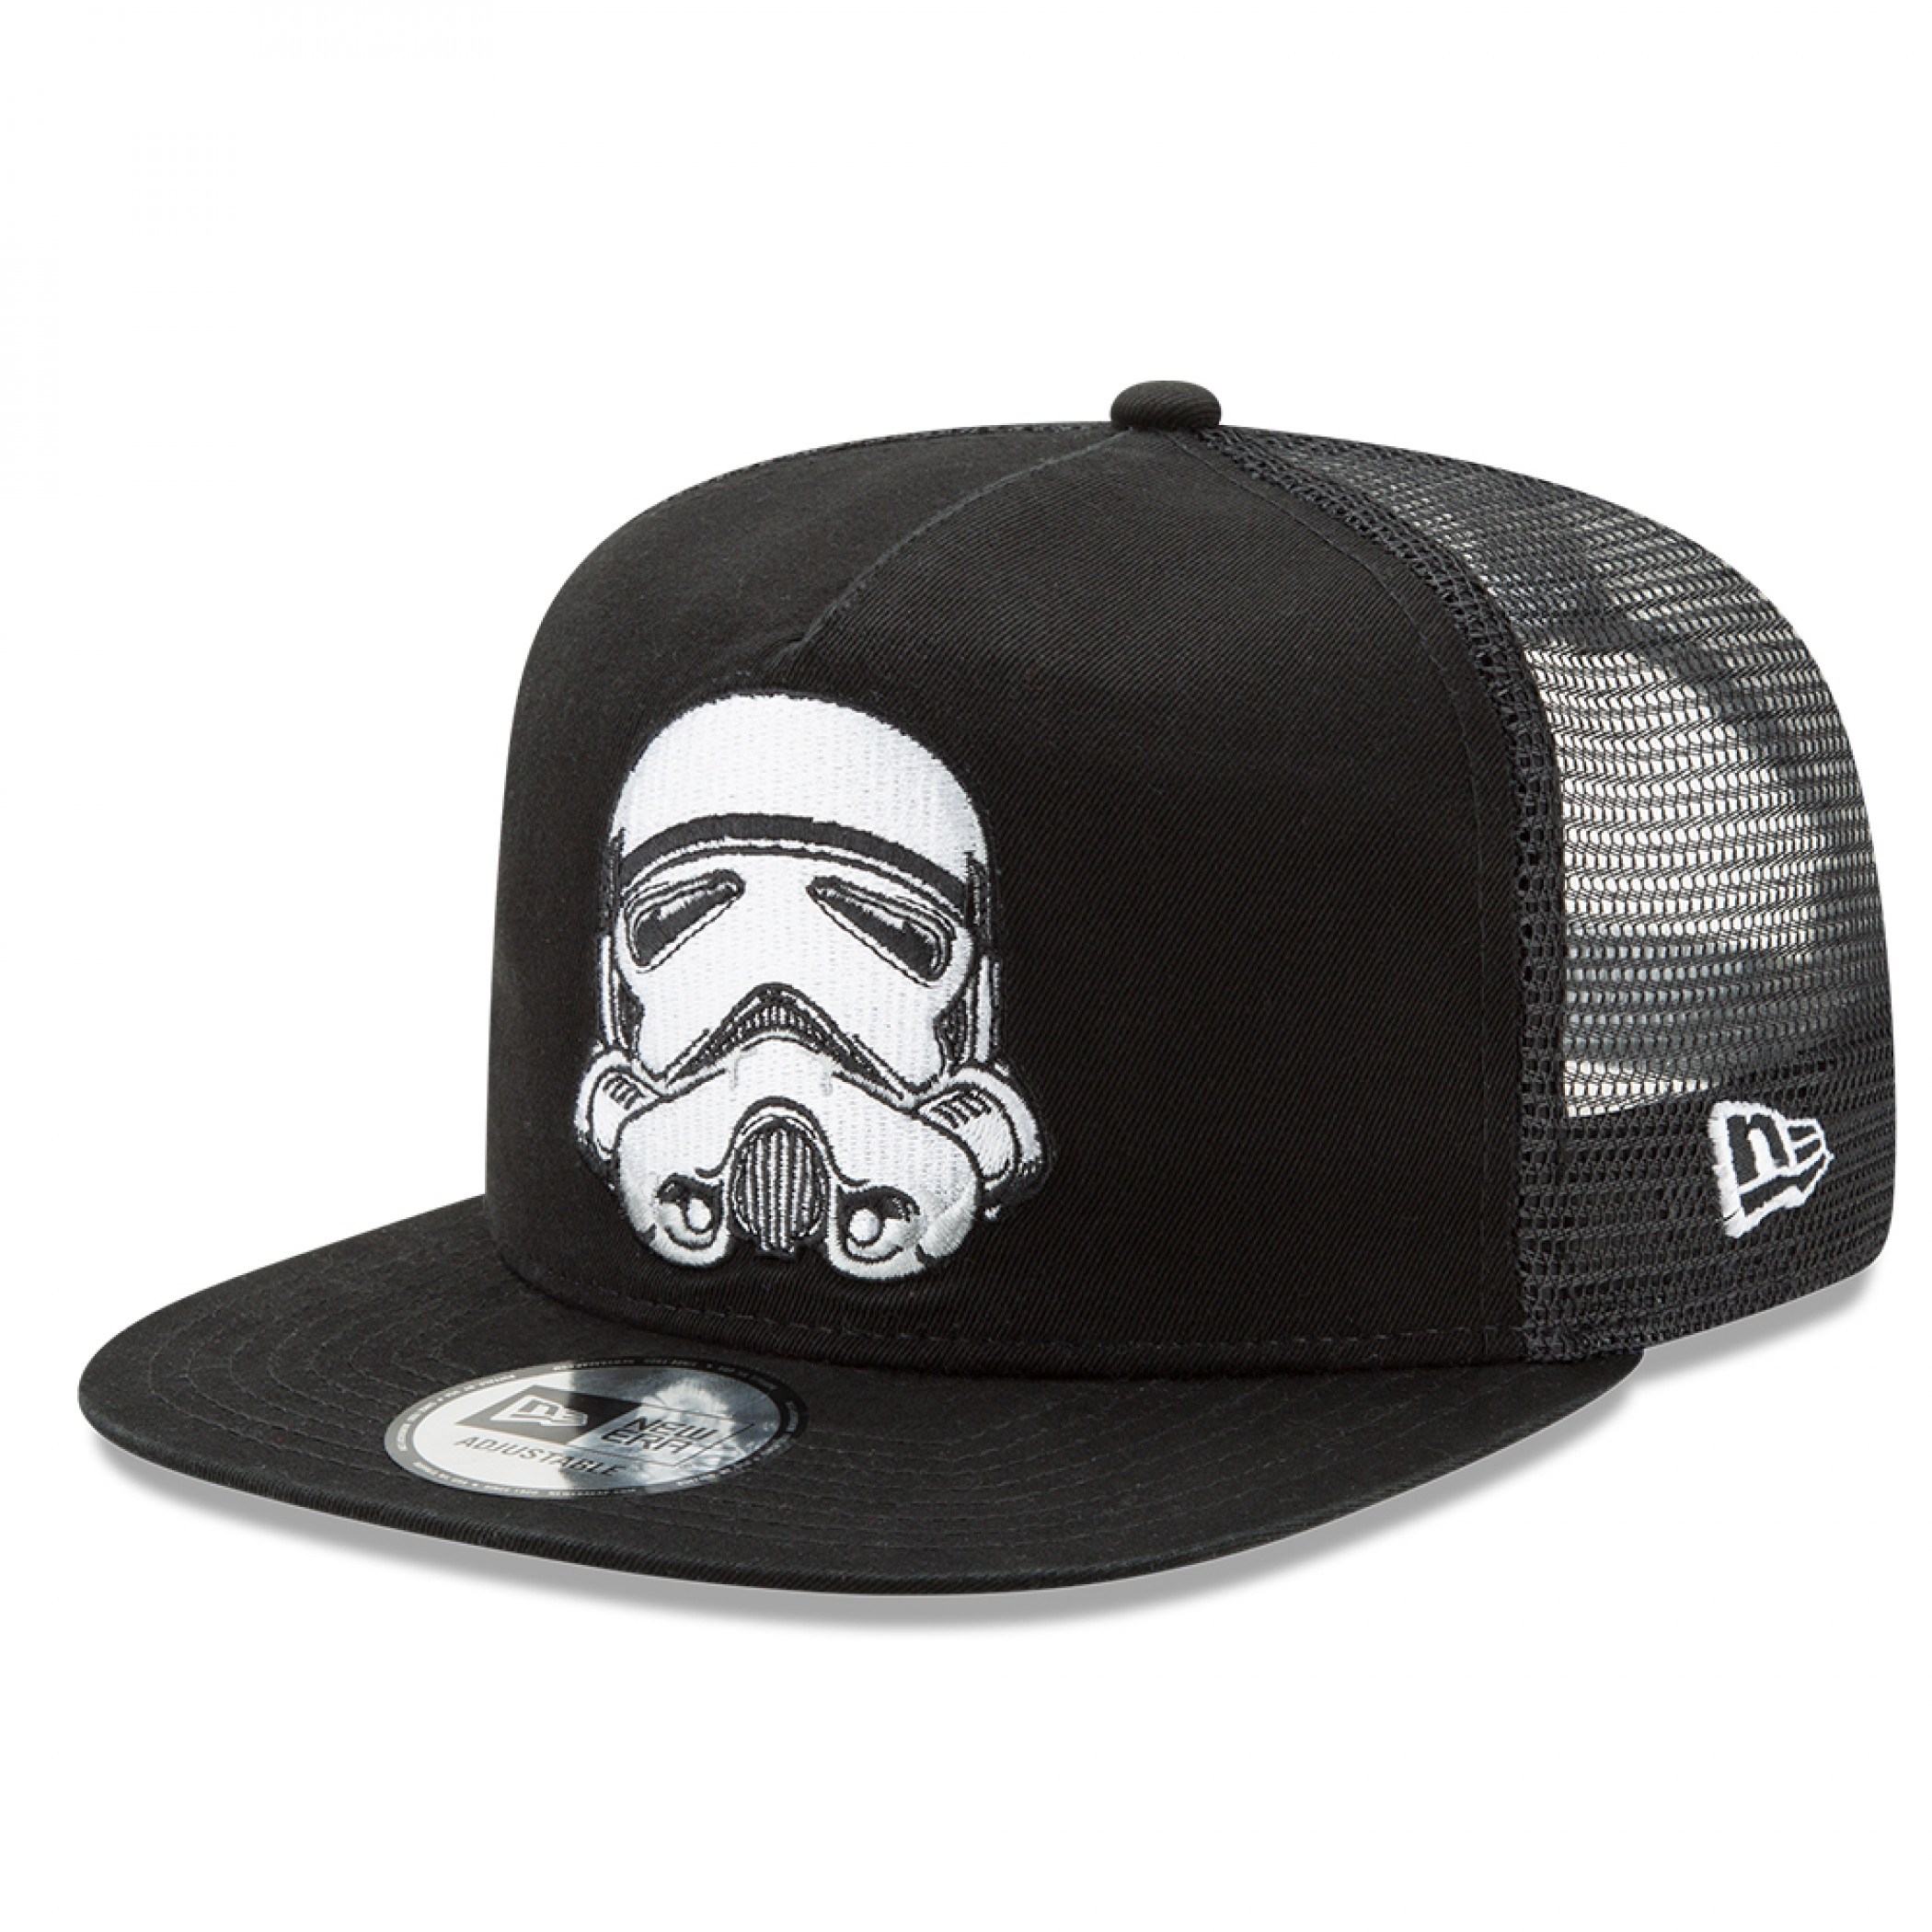 Star Wars Stormtrooper New Era 9Fifty Mesh Adjustable Trucker Hat